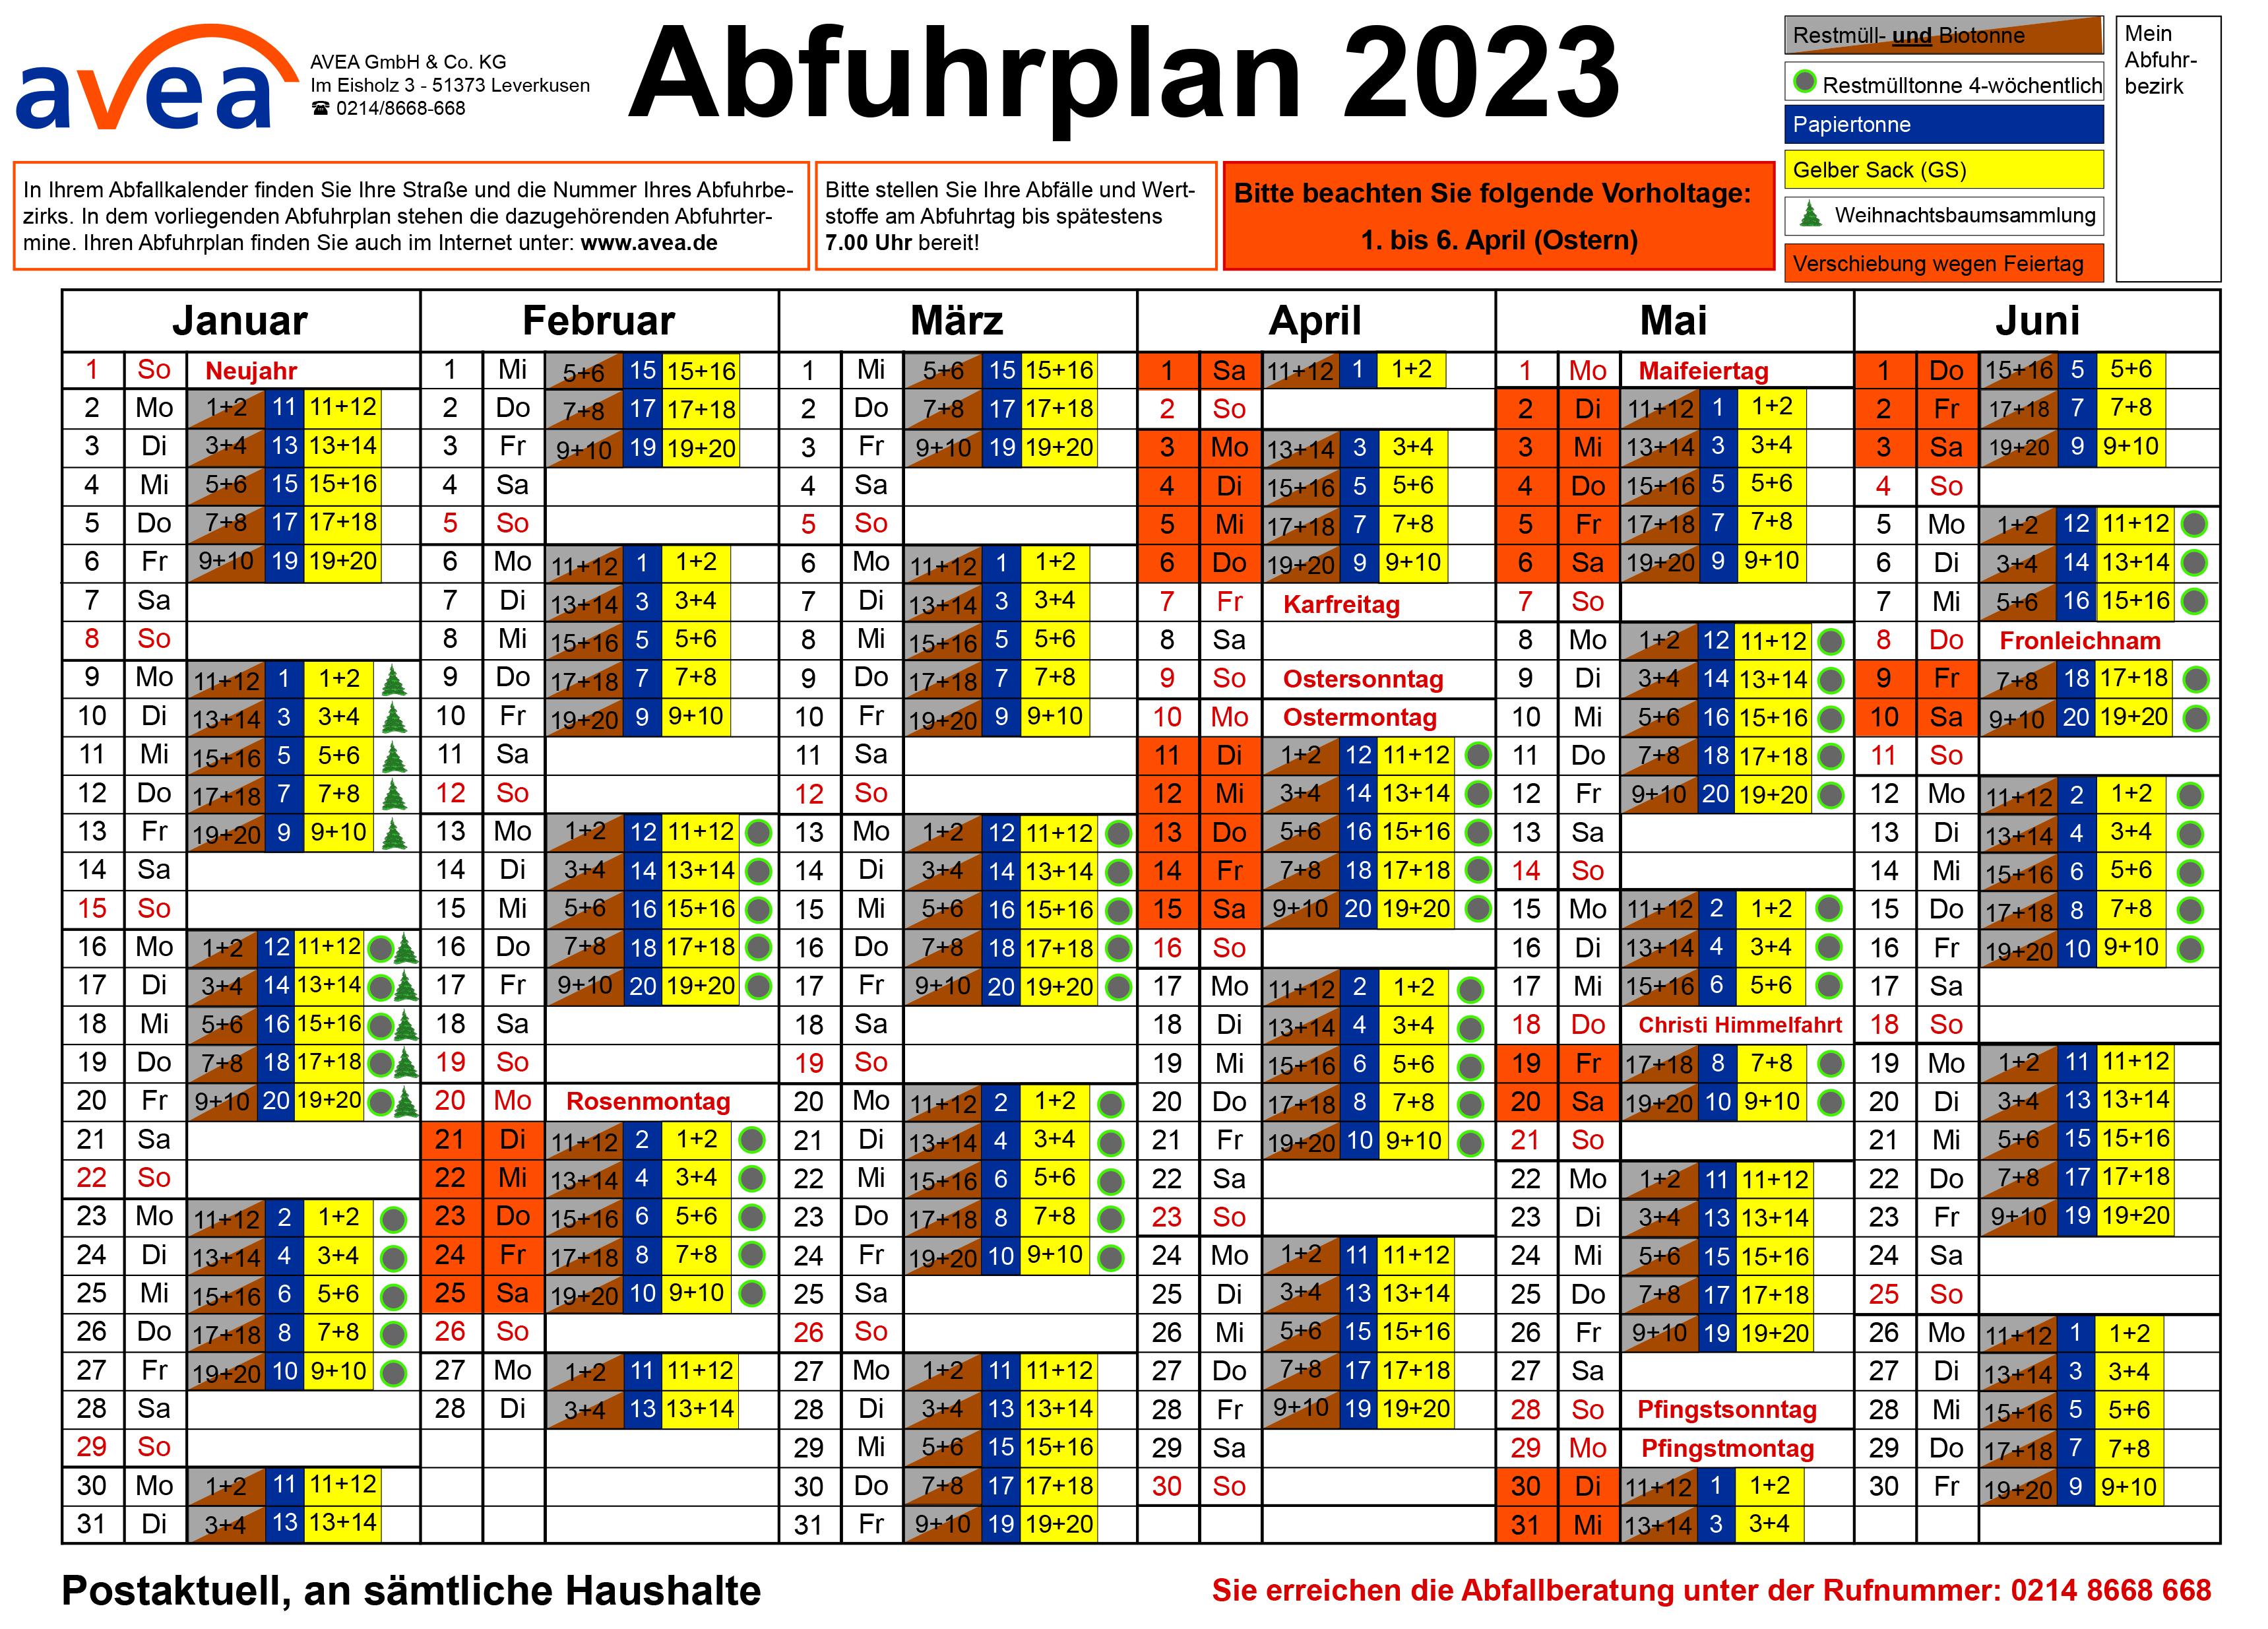 Abfuhrkalender Leverkusen 2023